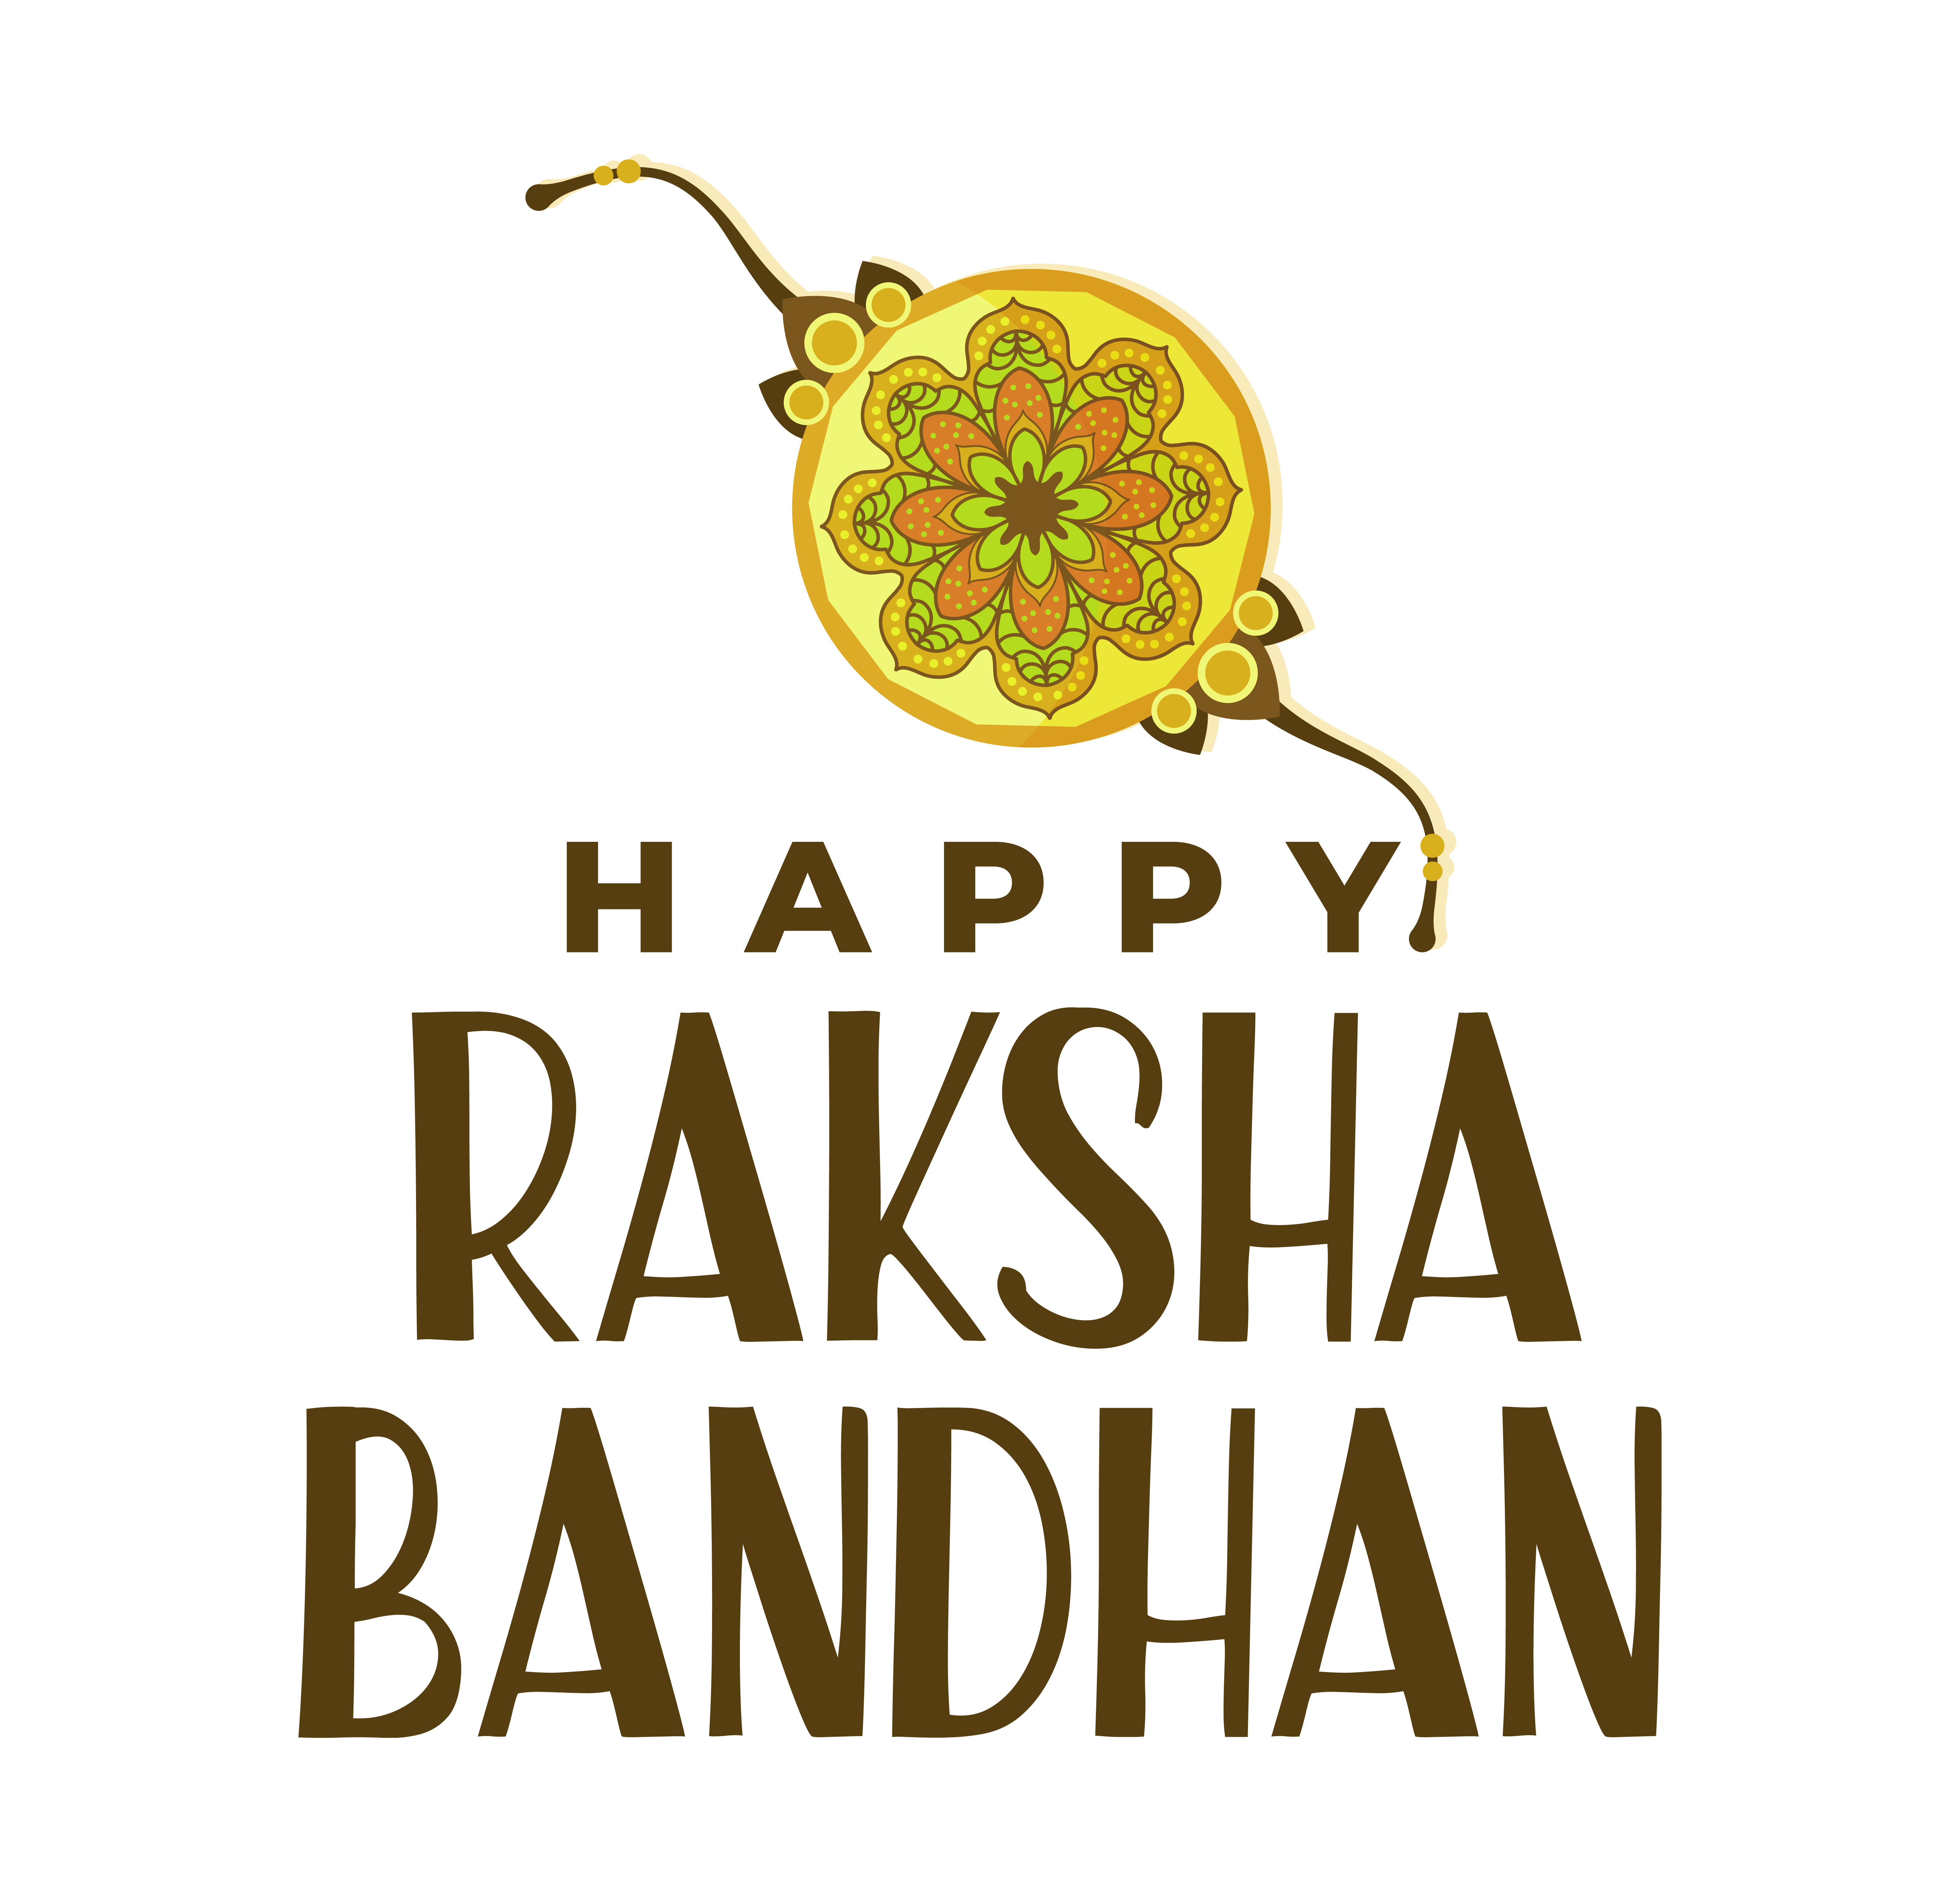 Raksha Bandhan Images – Browse 21,692 Stock Photos, Vectors, and Video |  Adobe Stock